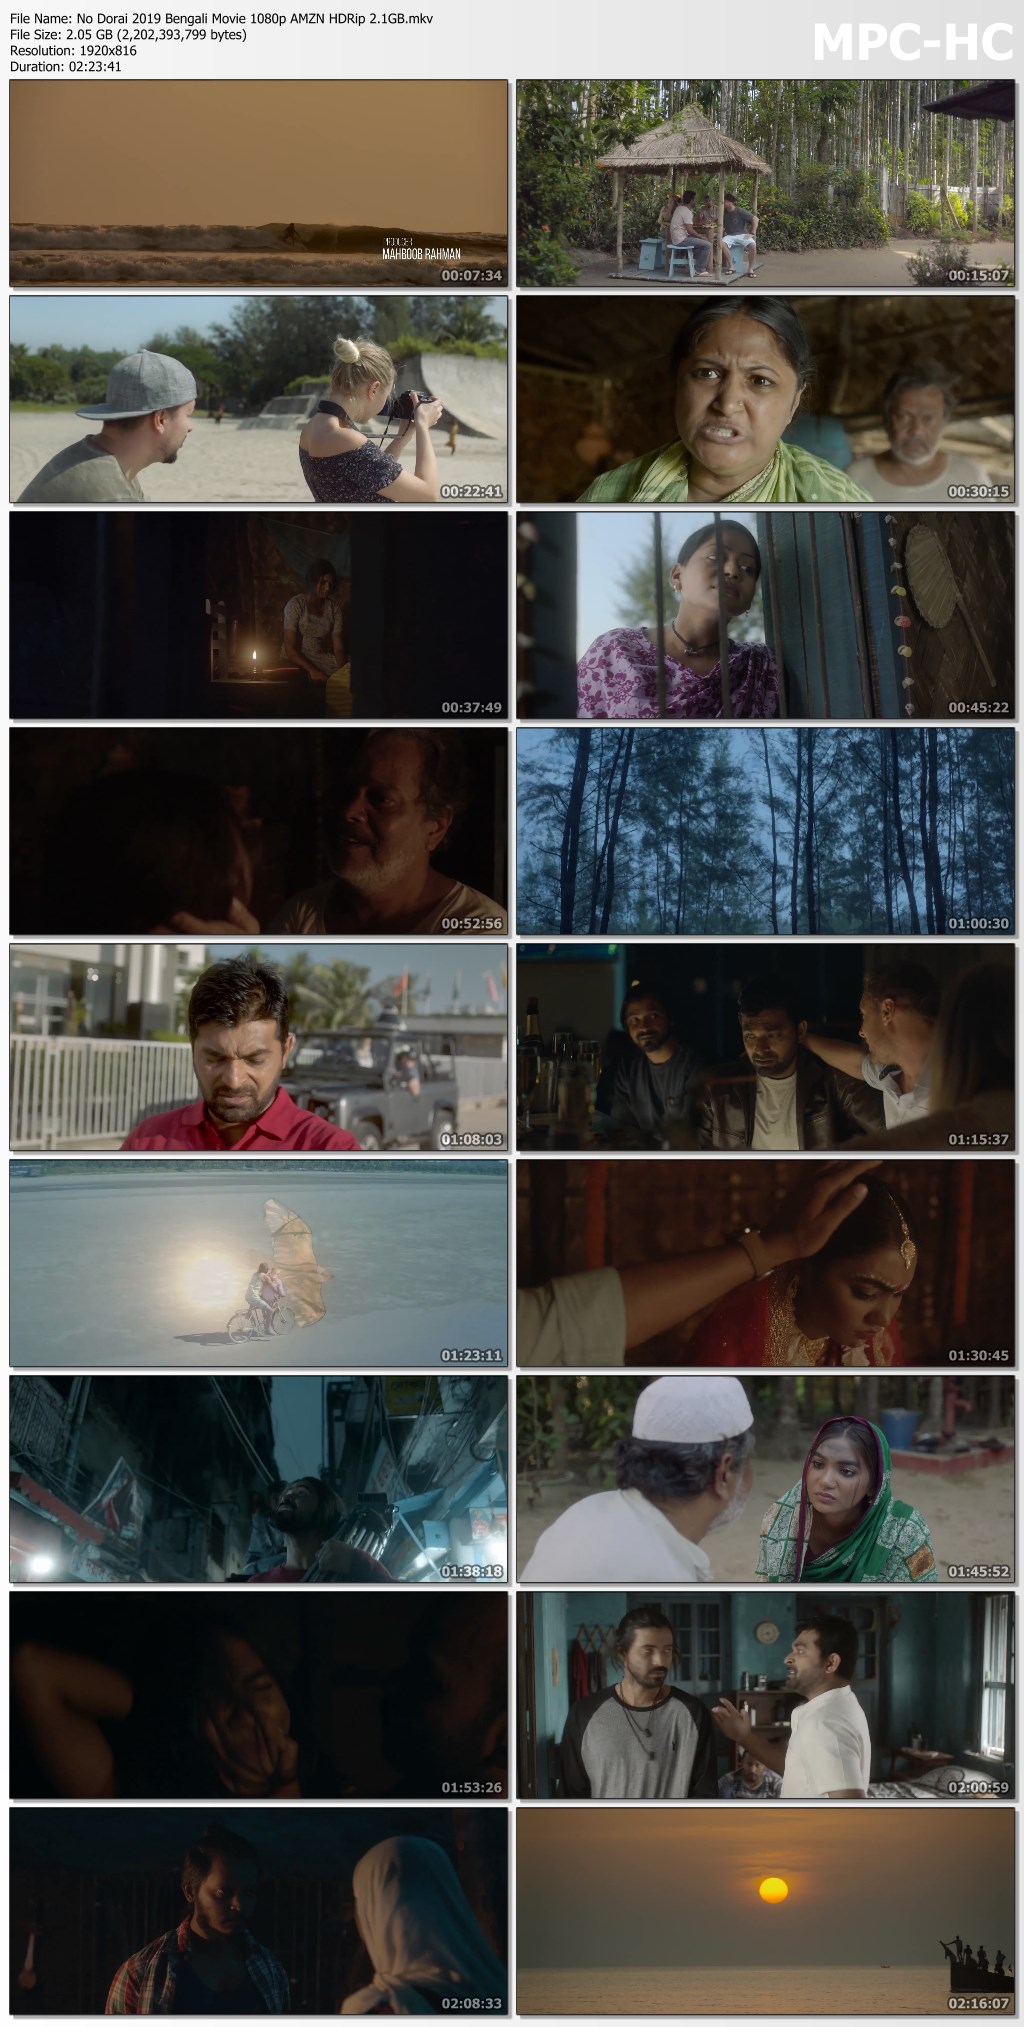 No-Dorai-2019-Bengali-Movie-1080p-AMZN-HDRip-2.1GB.mkv_thumbs.jpg